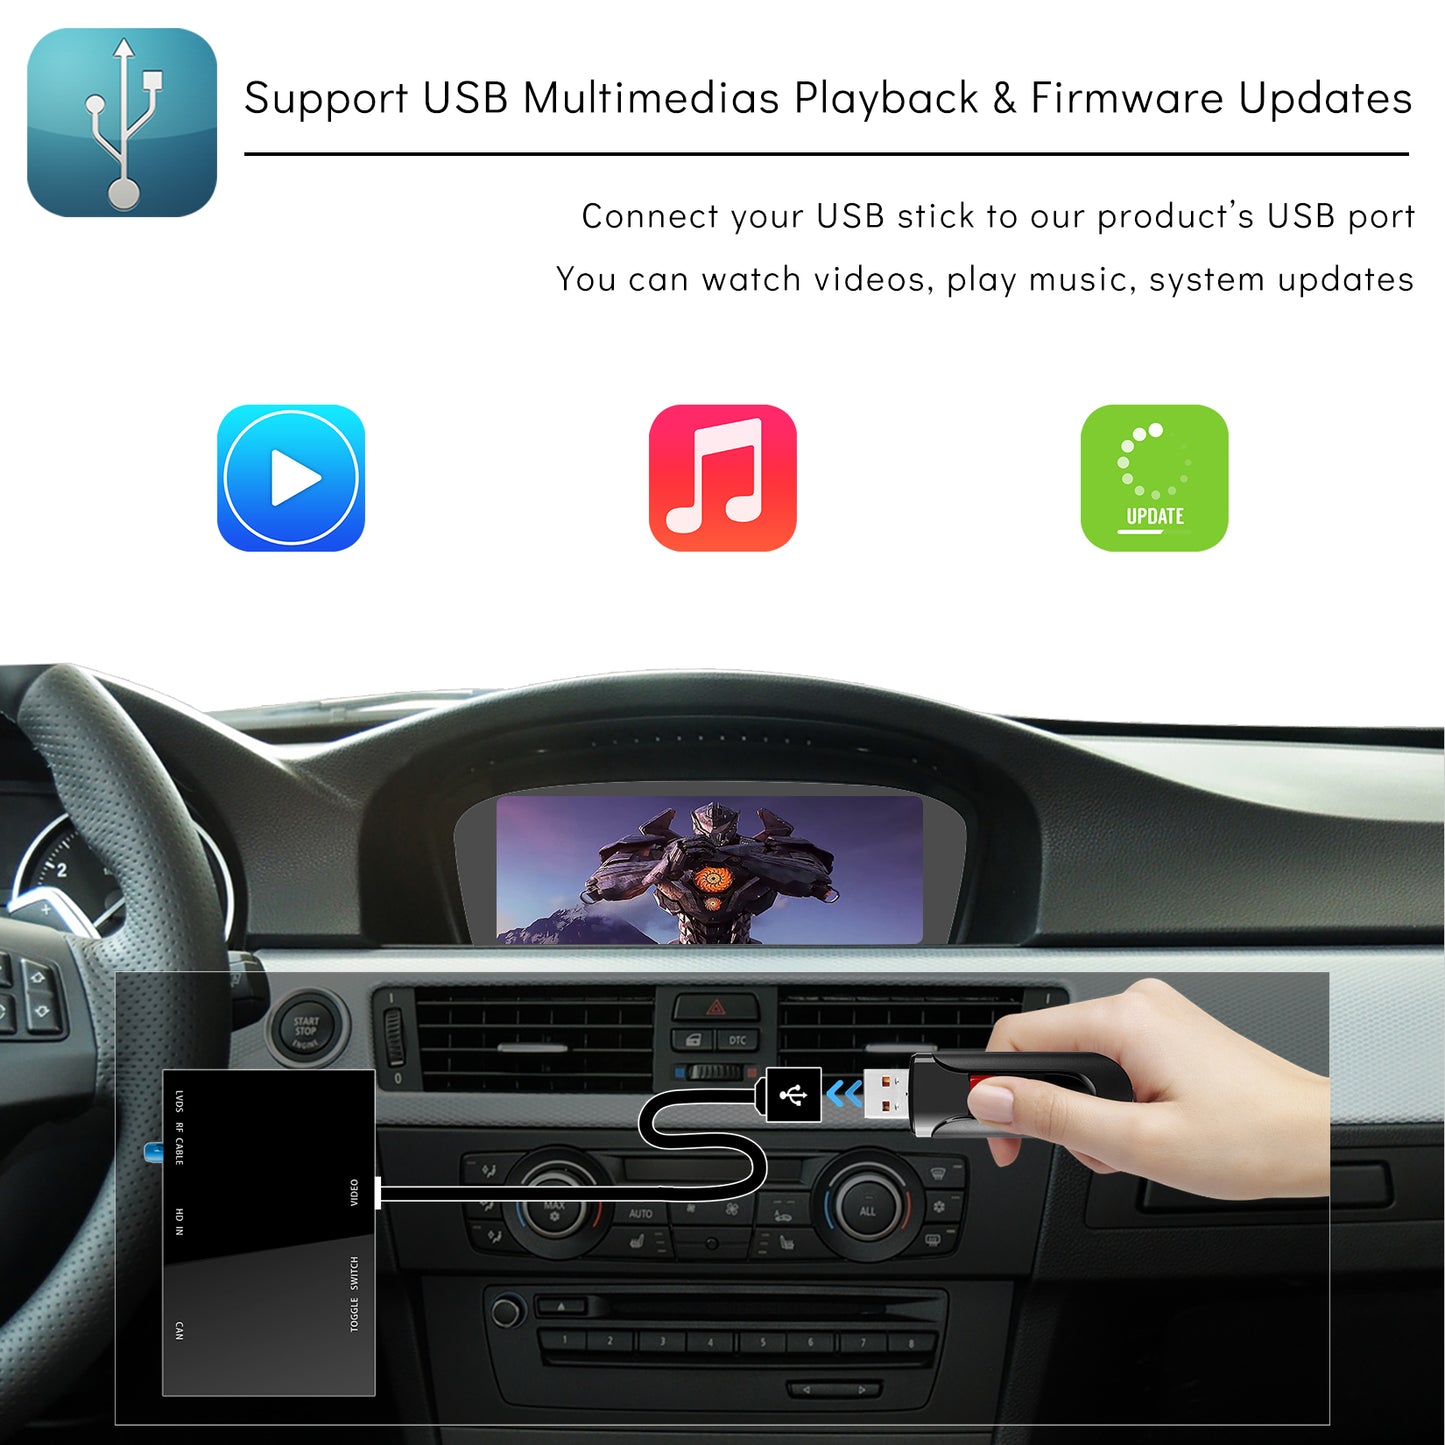 CarProKit for BMW Wireless CarPlay Android Auto Retrofit Kit Support BMW 1/3/5/6/X5/X6 with CCC System 2005-2008